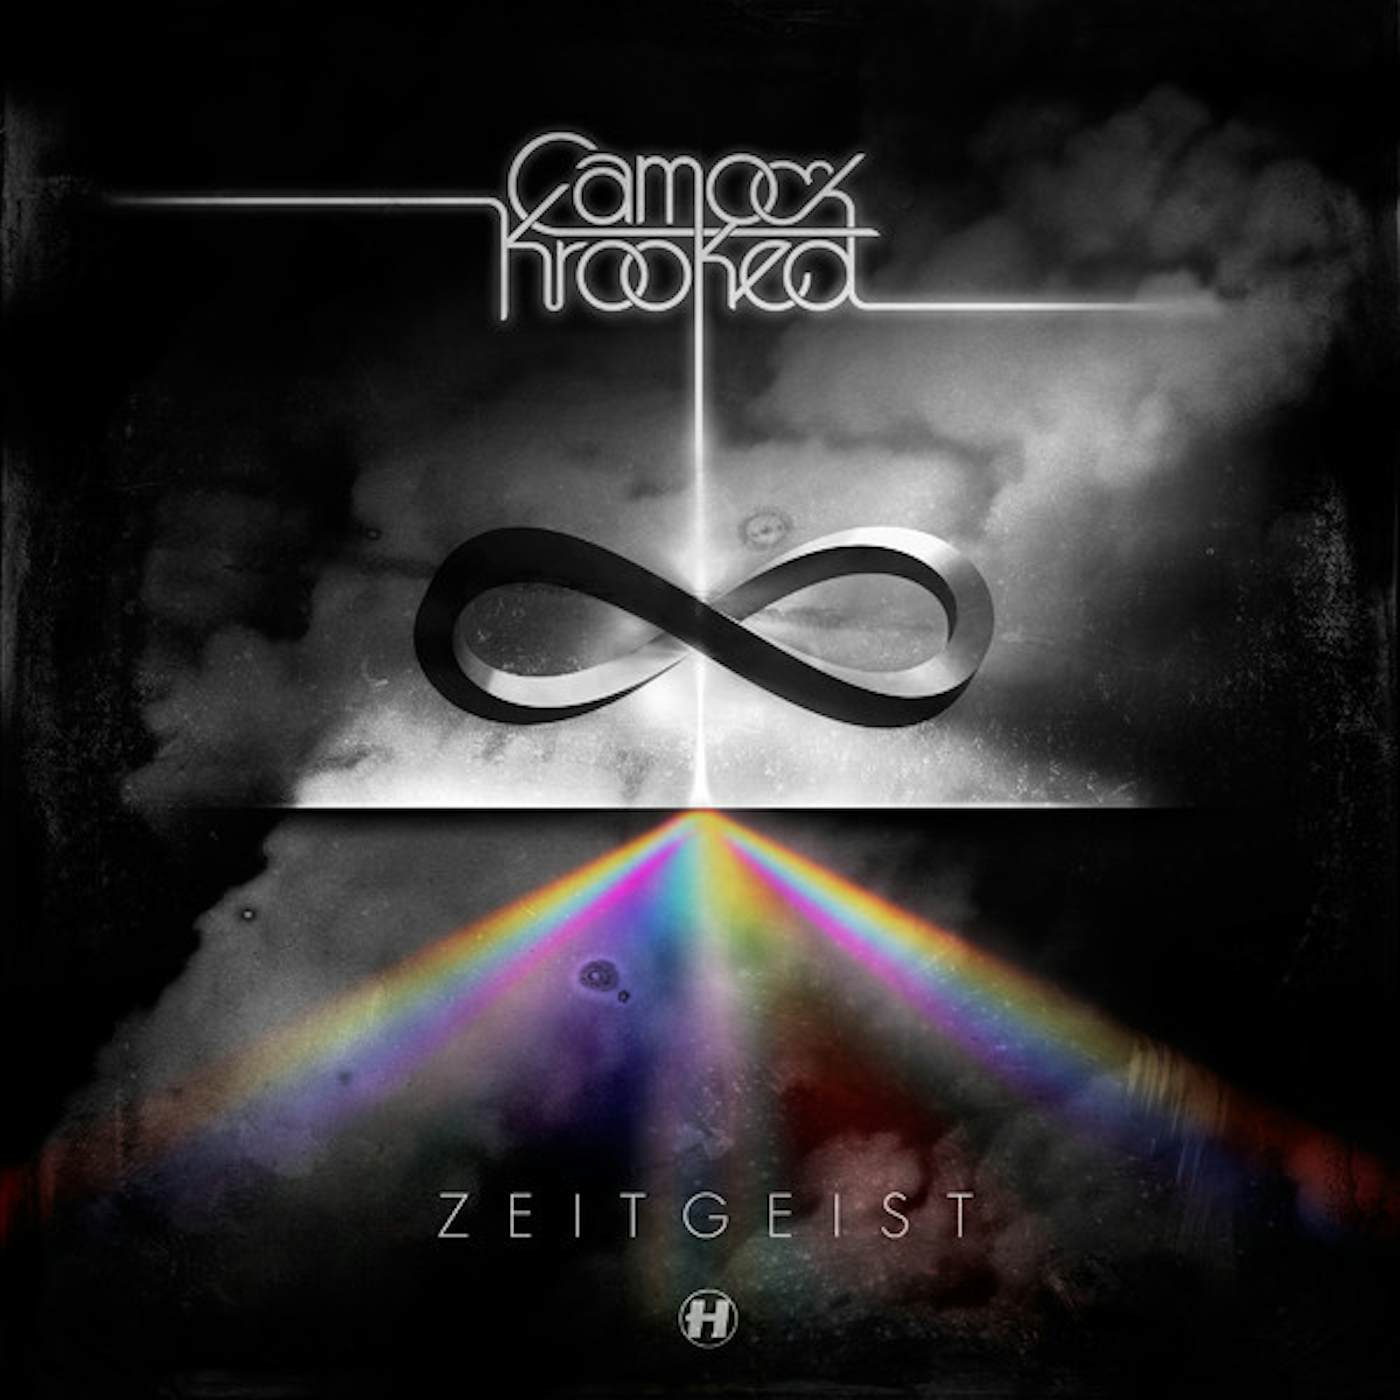 Camo & Krooked Zeitgeist Vinyl Record